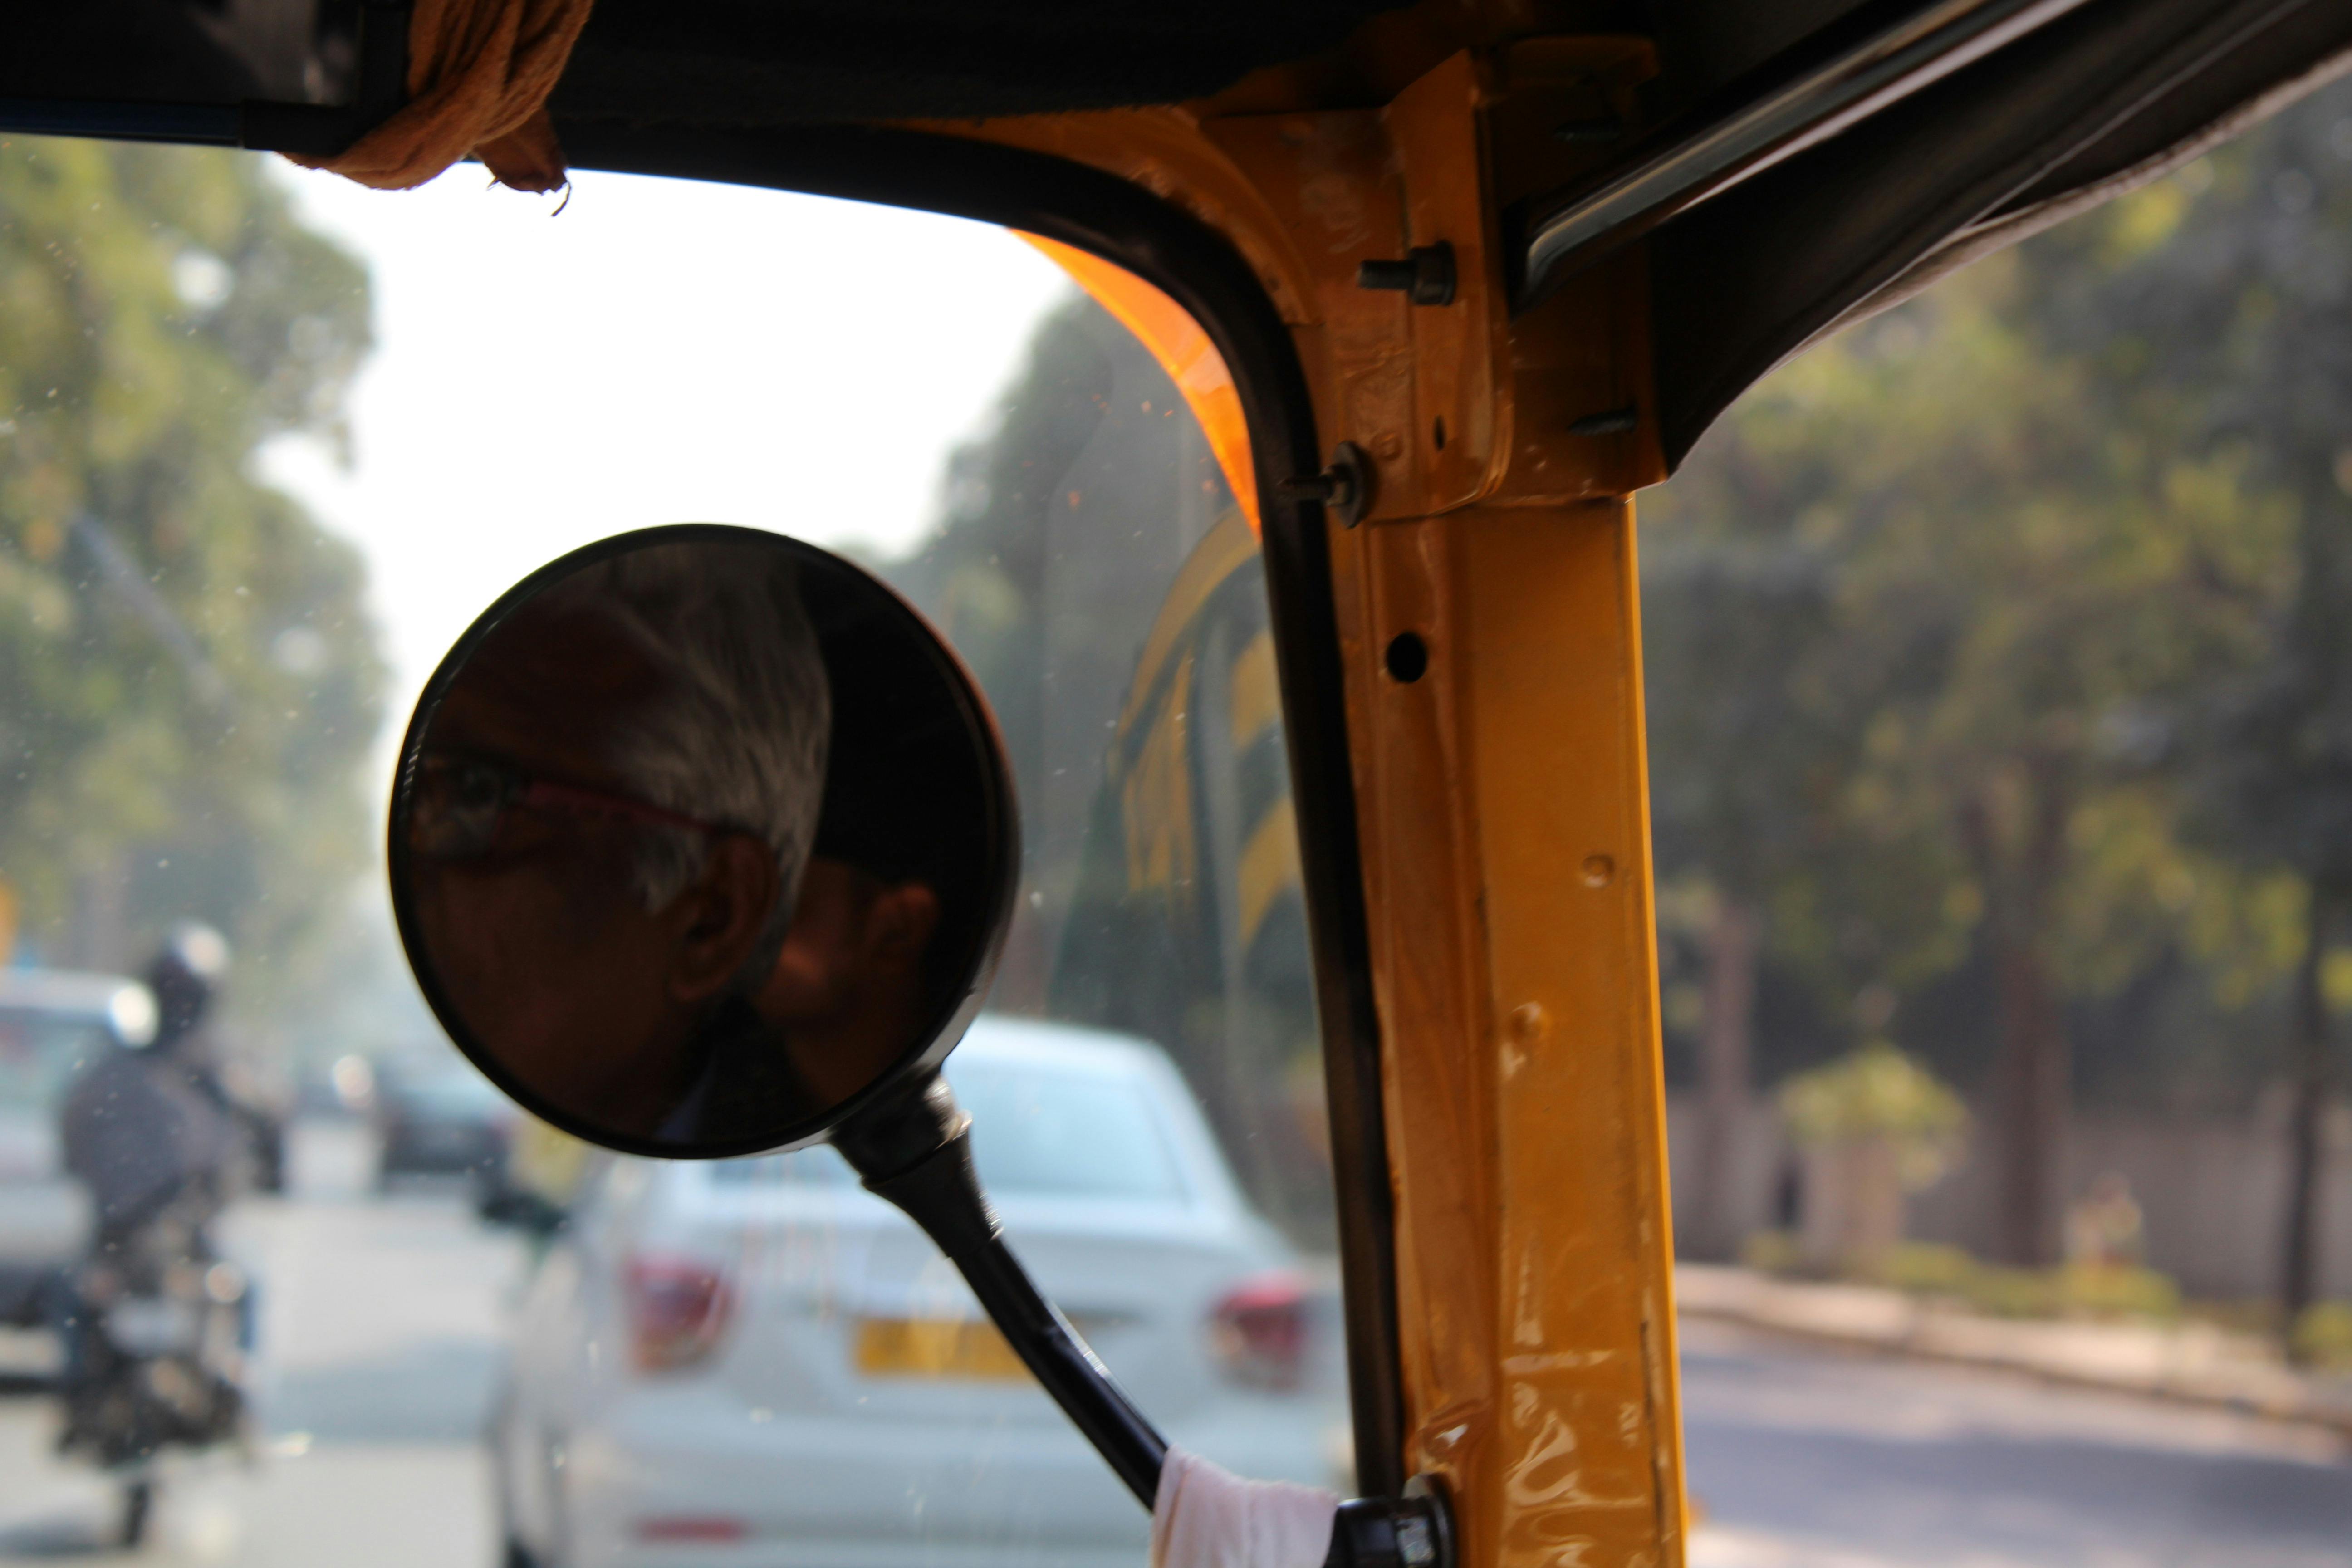 Free stock photo of Auto rikshaw, mirror image